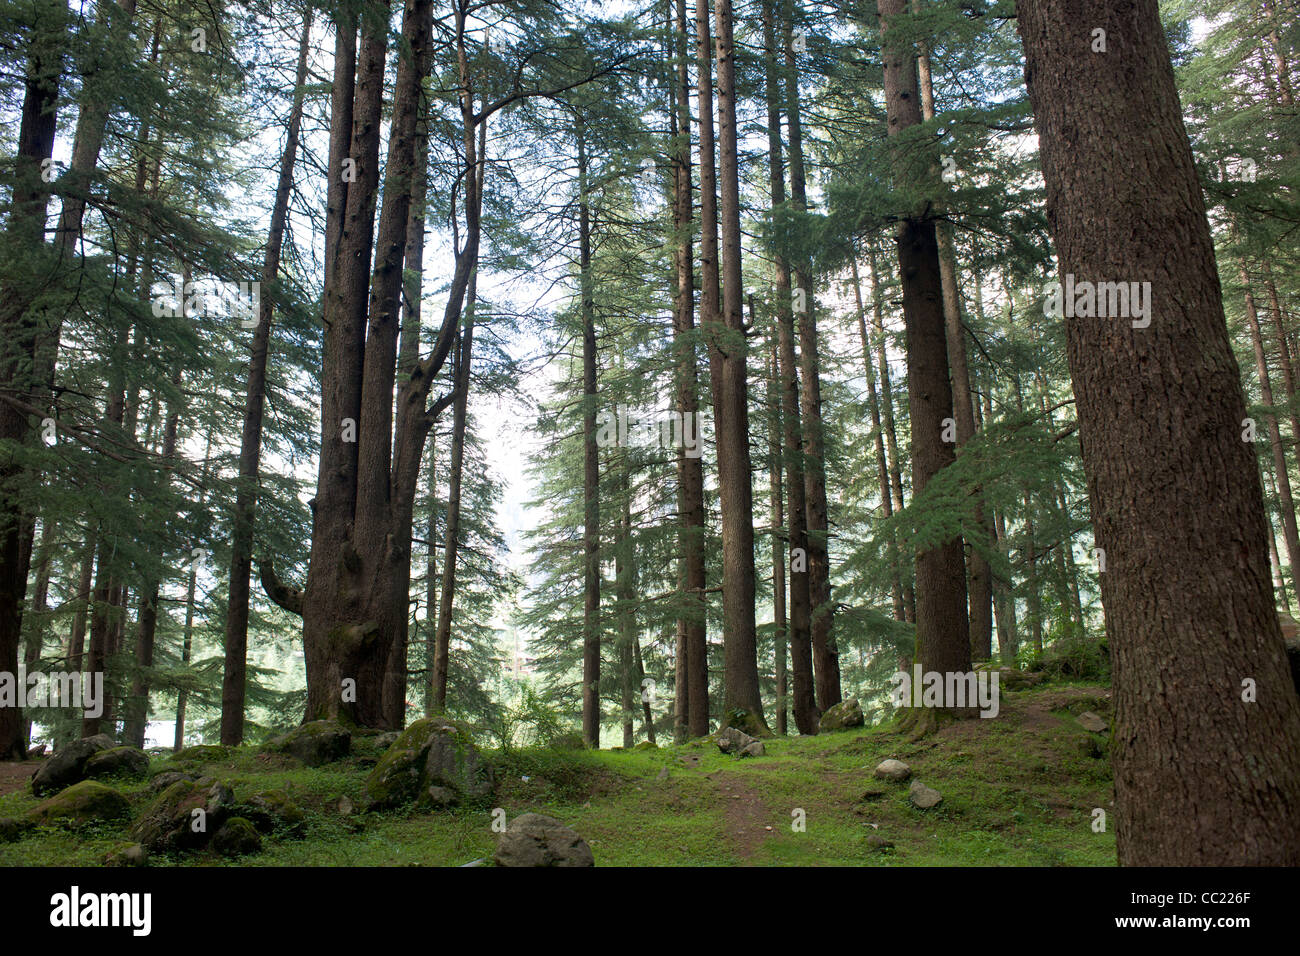 Deodar giganteschi alberi di cedro (Cedrus deodara) nella foresta Deodar Riserva, Manali, Himachal Pradesh, India Foto Stock